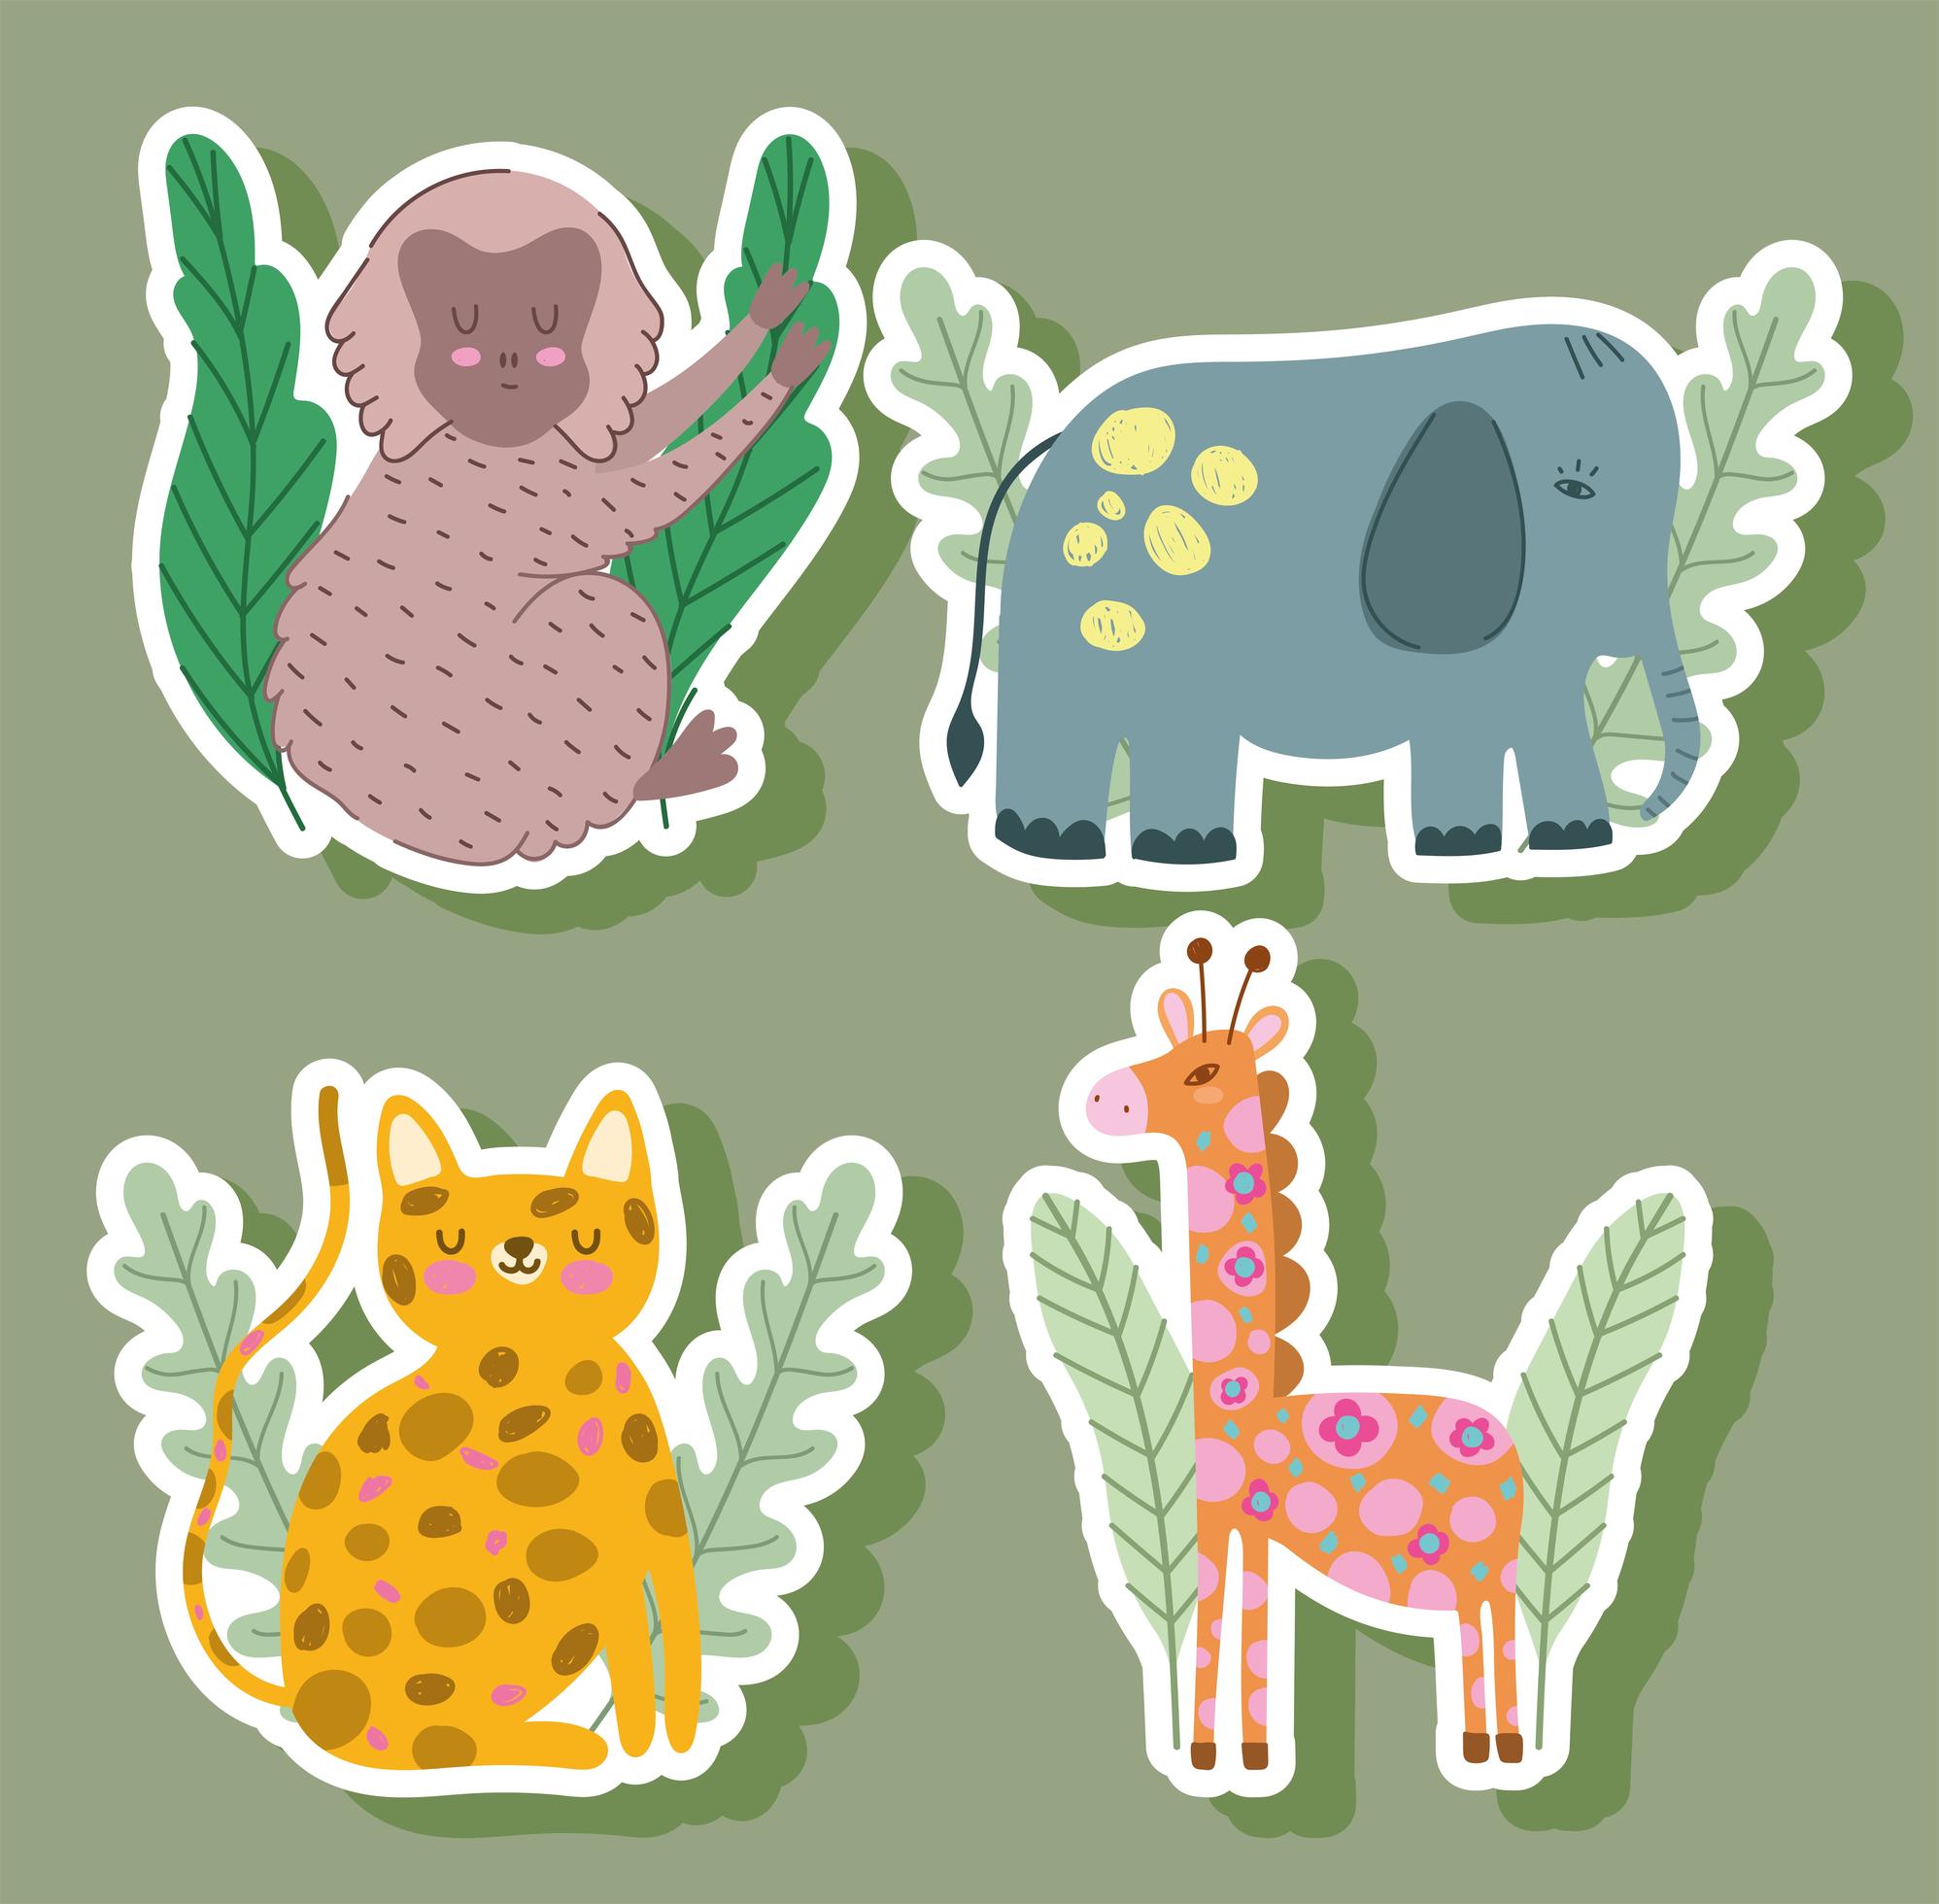 Scented Safari”: "Жираф" (Giraffe), "обезьяна" (Monkey); “Lakefield”: "олень" (Deer), "утка" (Duck);. Giraffe elephant monkey